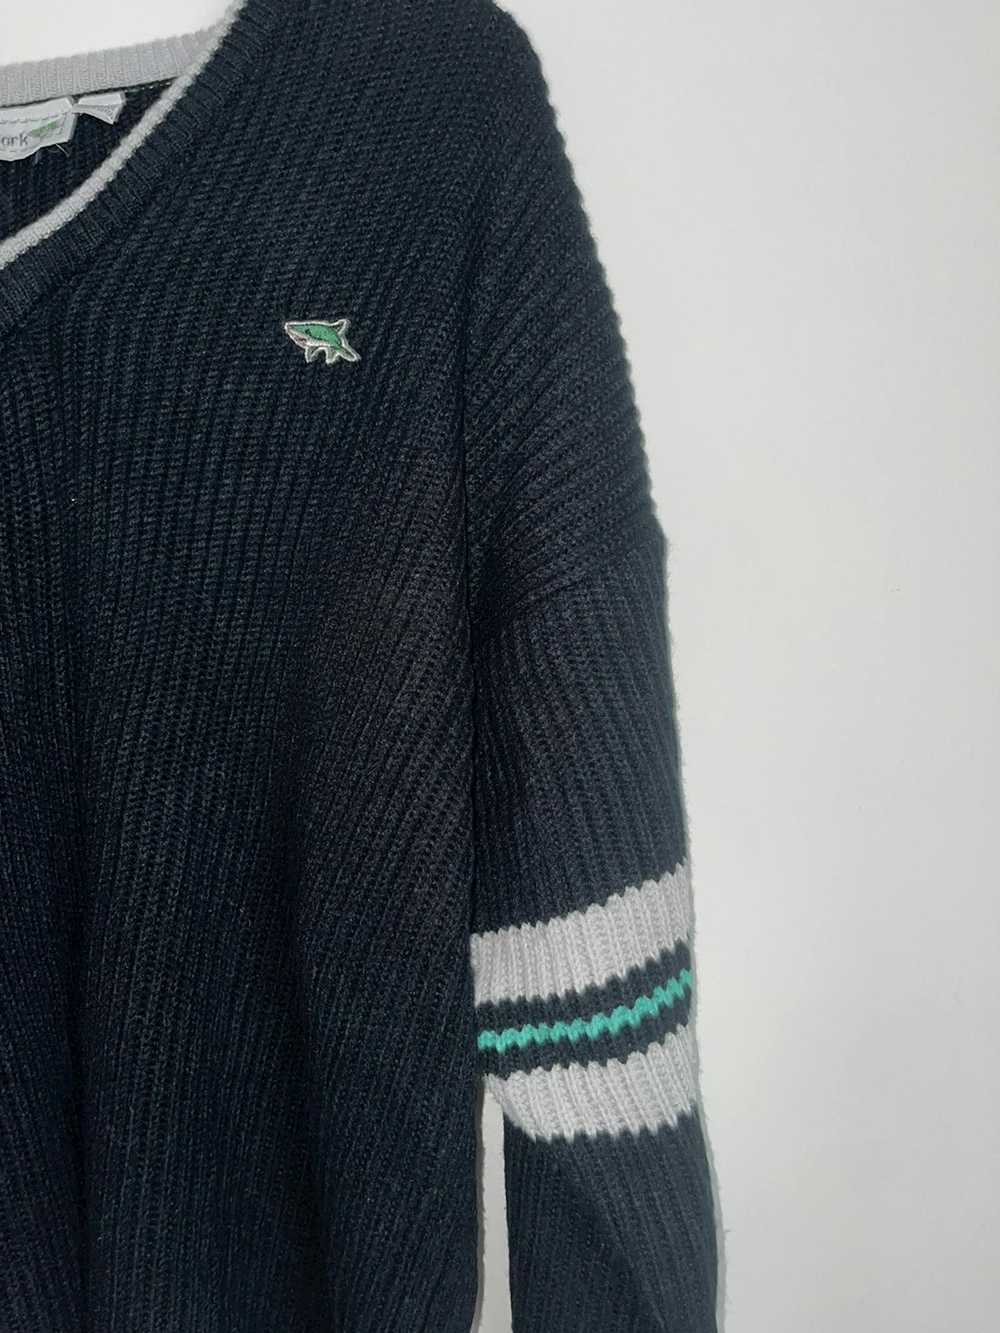 Vintage Vintage Le Shark sweater - image 2